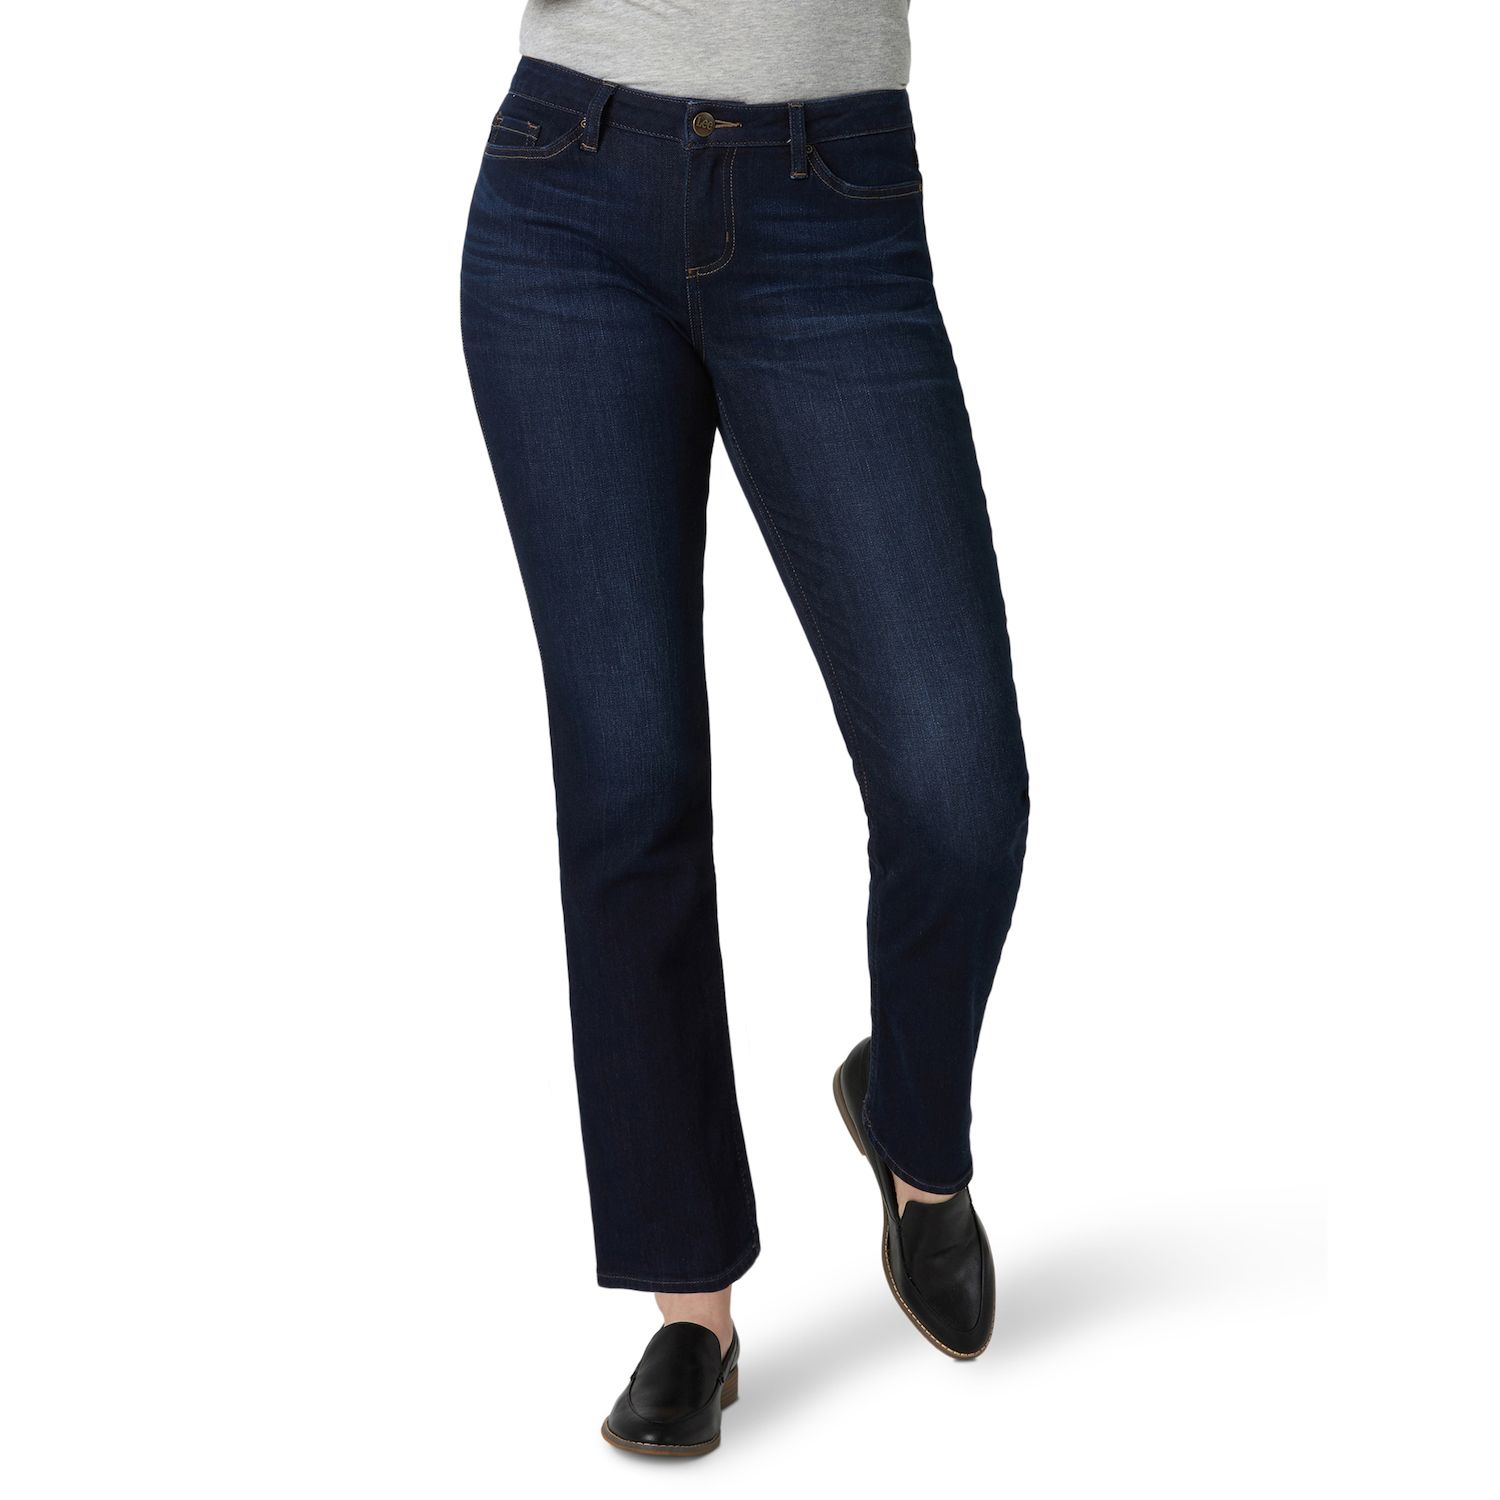 Image for Lee Women's Legendary Straight Jeans at Kohl's.